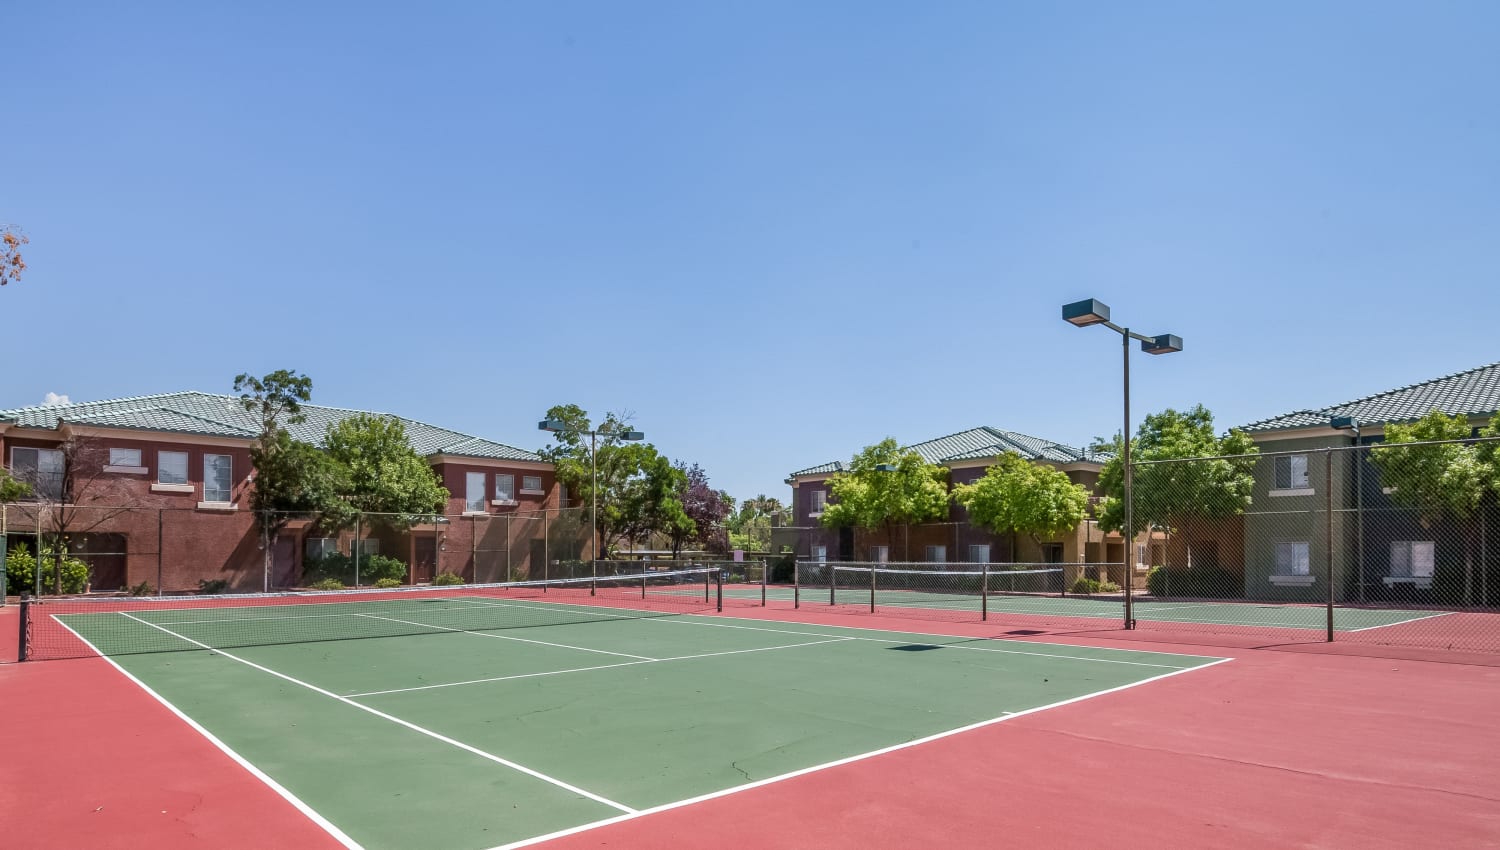 Tennis courts at Durango Canyon Apartments in Las Vegas, Nevada